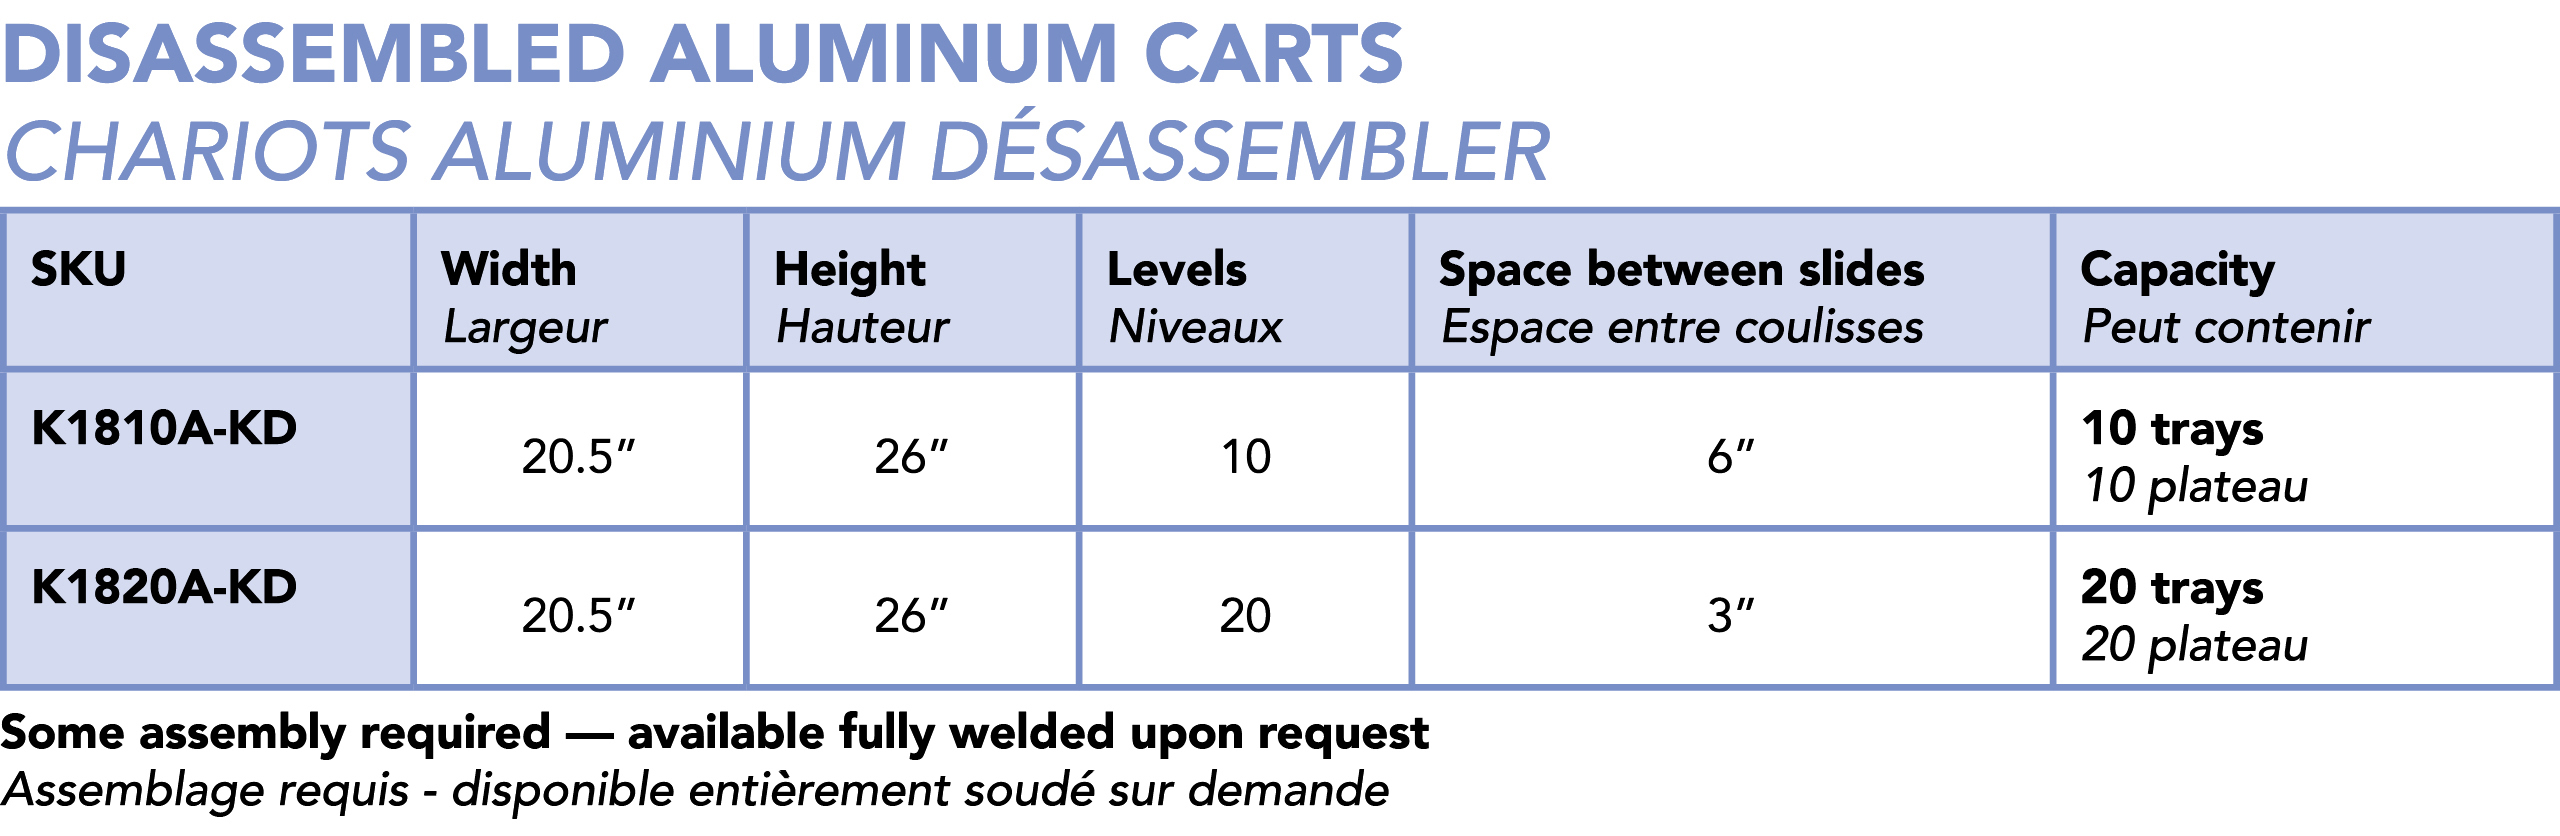 Disassembled aluminum carts